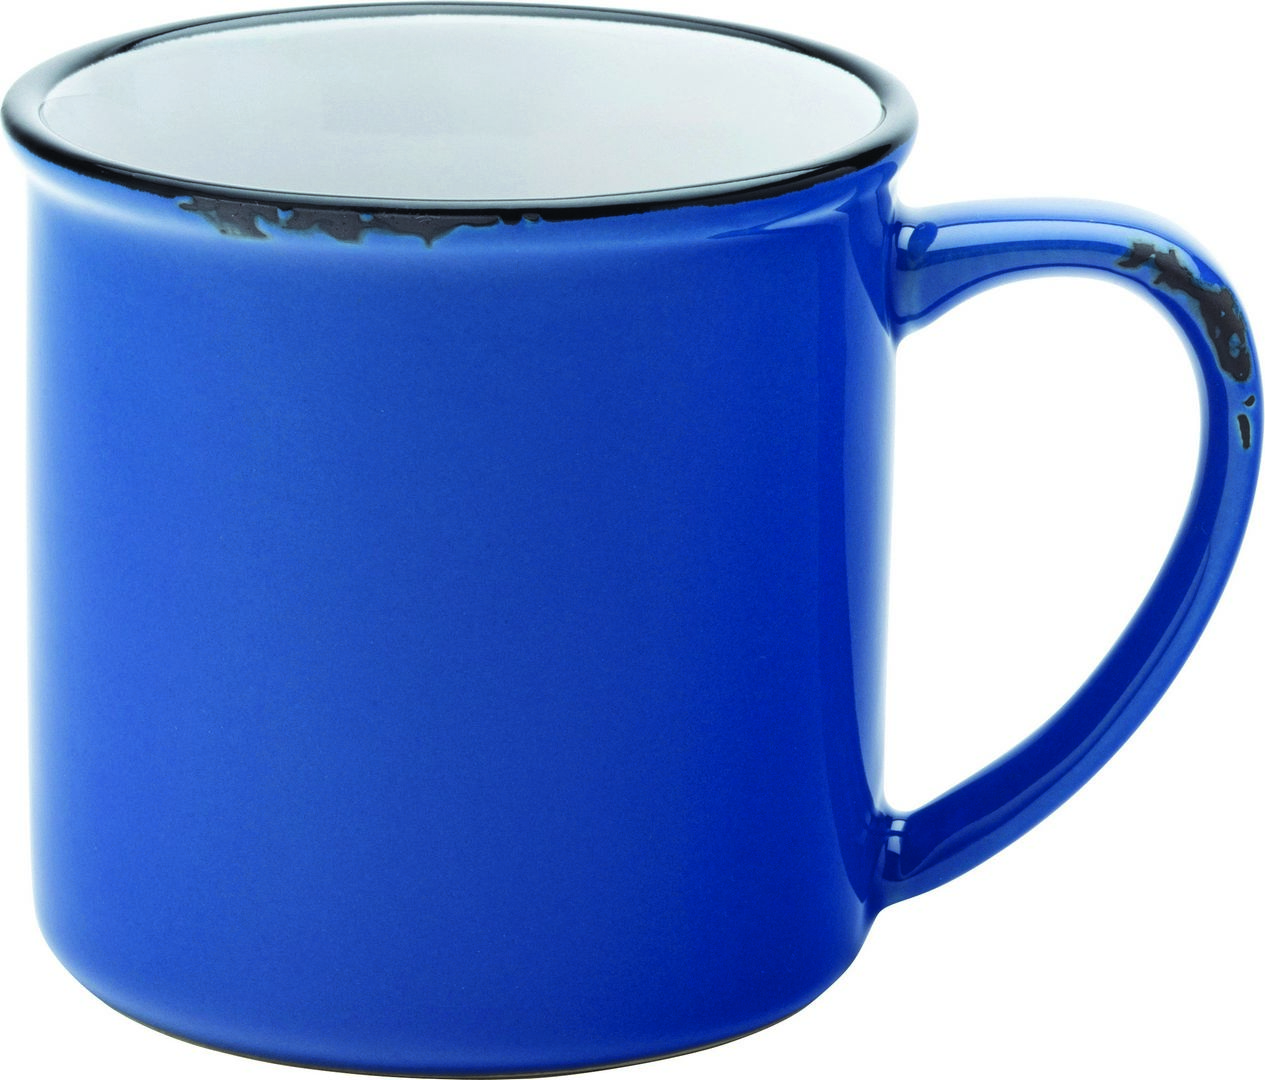 Avebury Colours Blue Mug 10oz (28cl) - CT6014-000000-B01012 (Pack of 12)